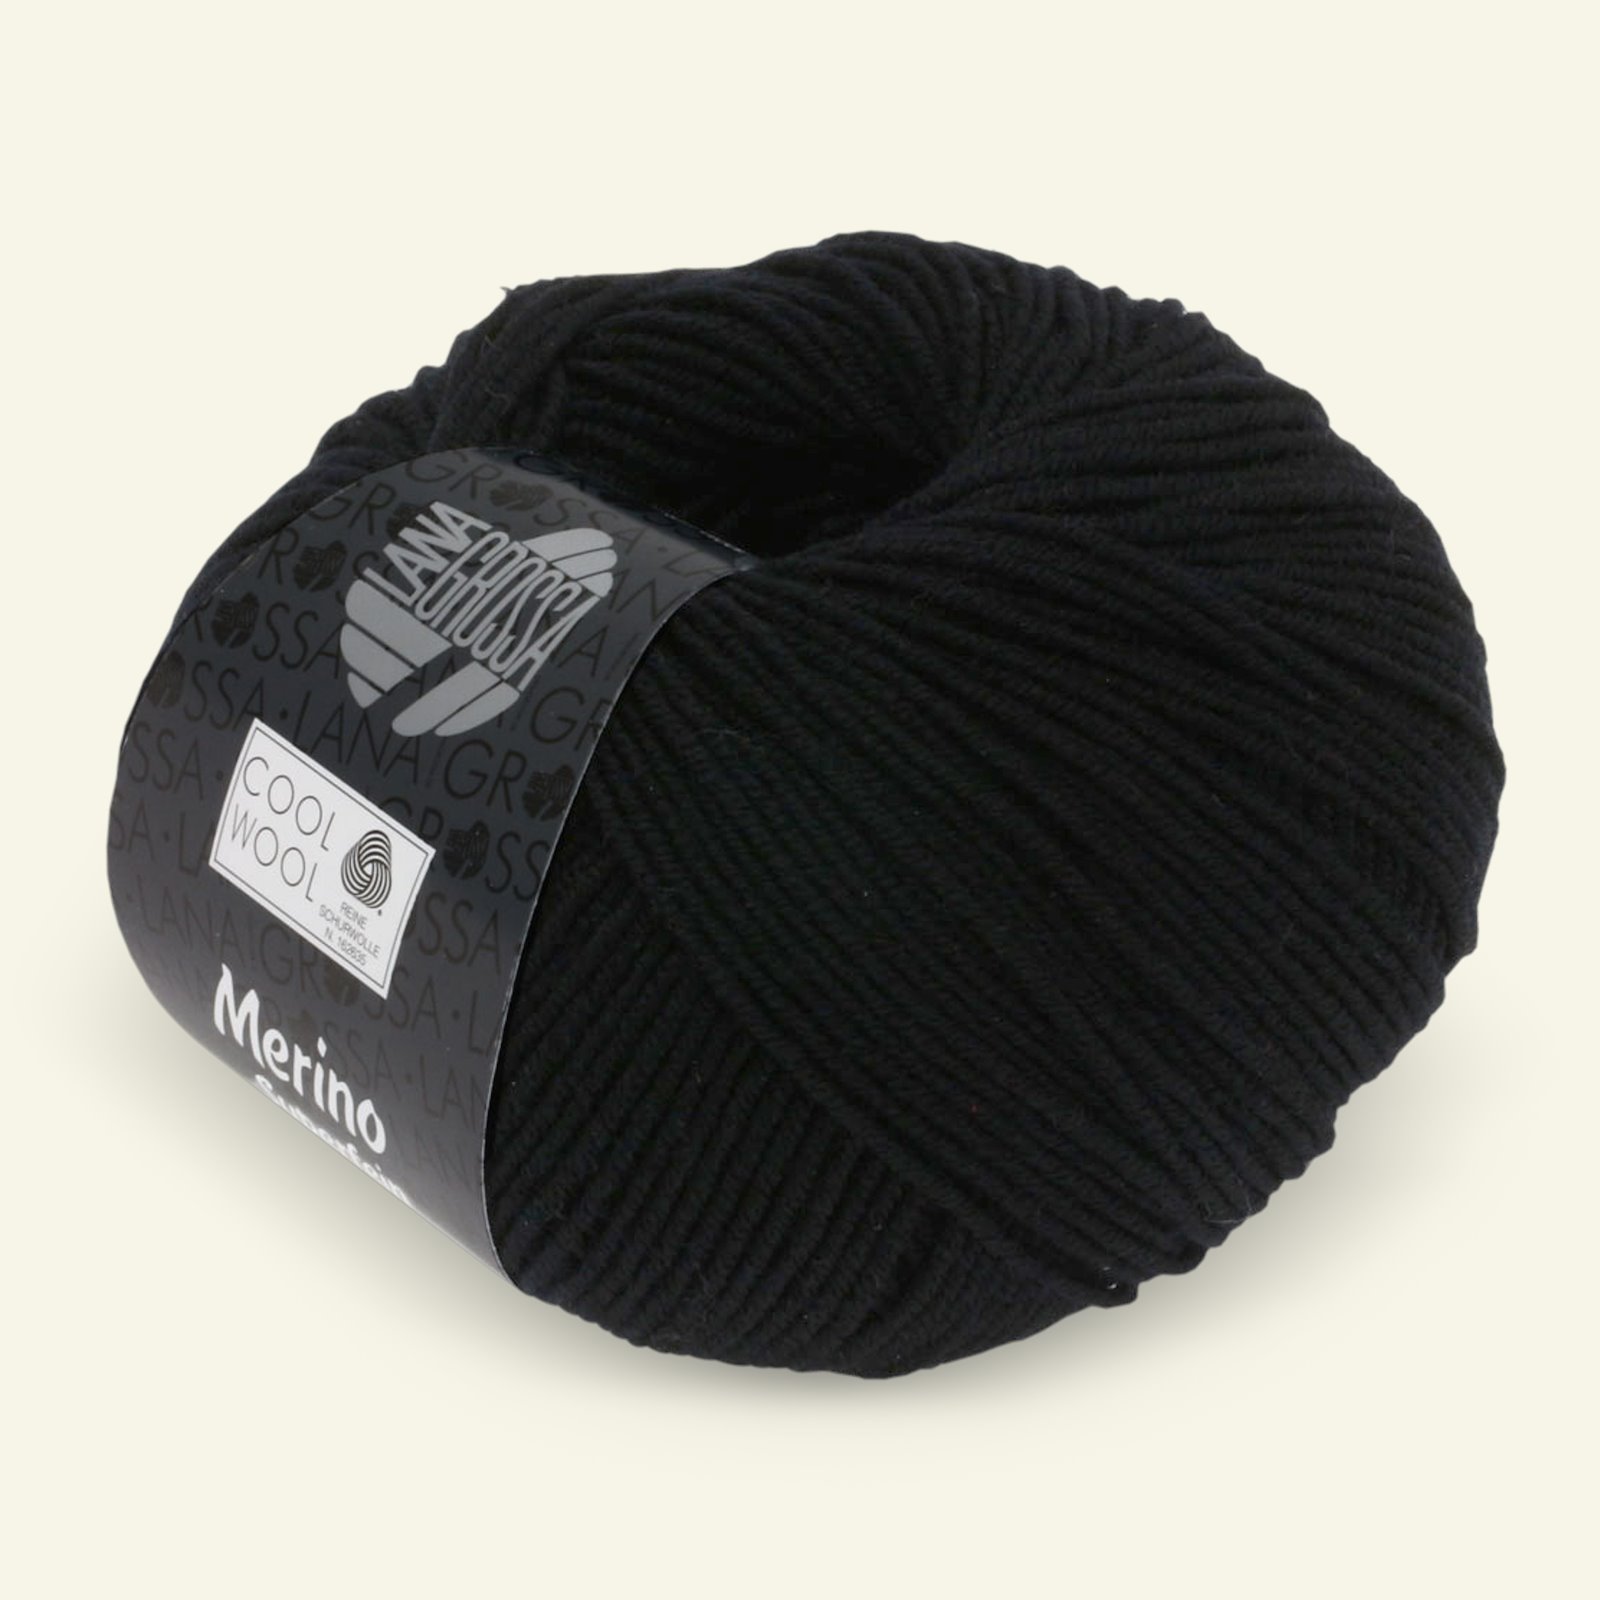 Lana Grossa, extrafine merino wool yarn "Cool Wool", black 90001135_pack